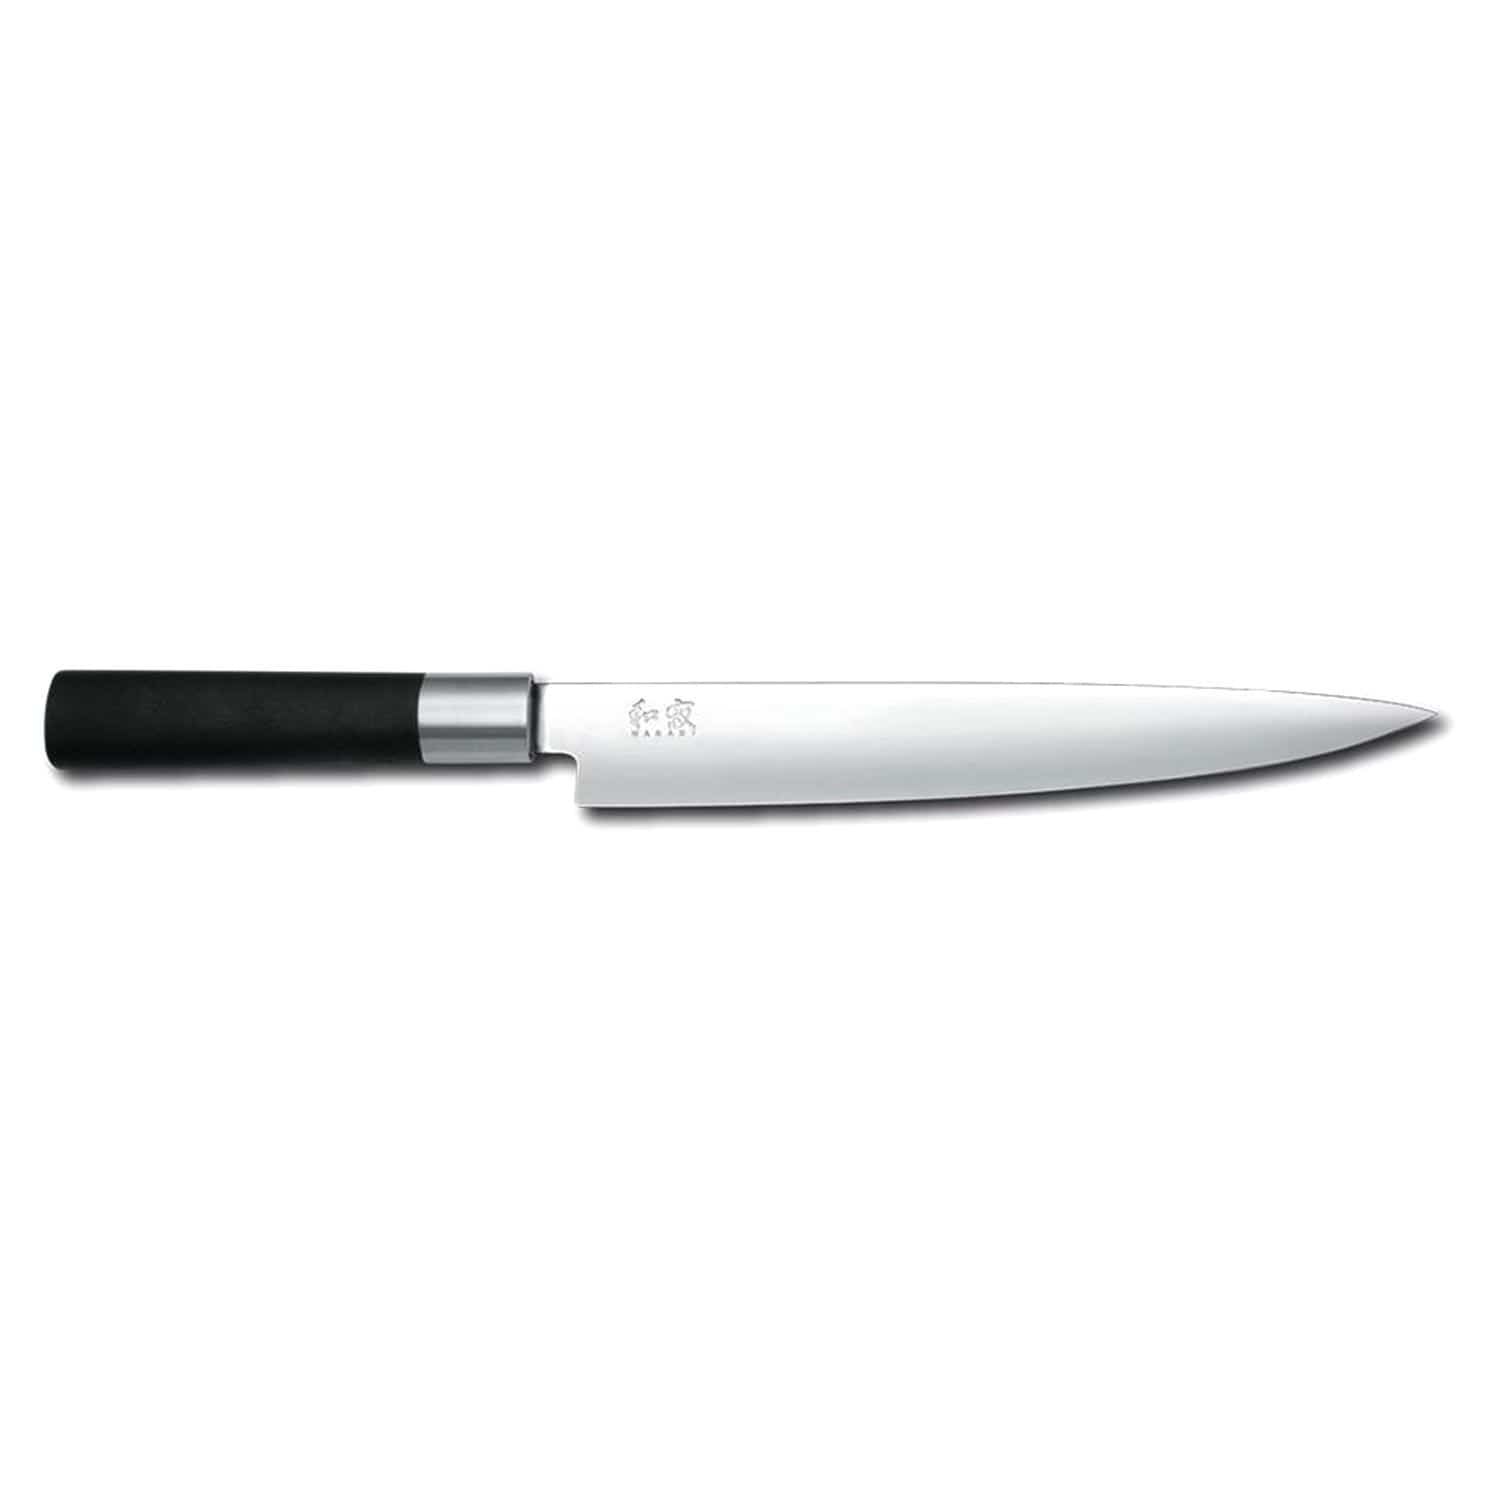 Kai Wasabi 9 Slicing Knife - Black, 23 cm - 6723L - Jashanmal Home